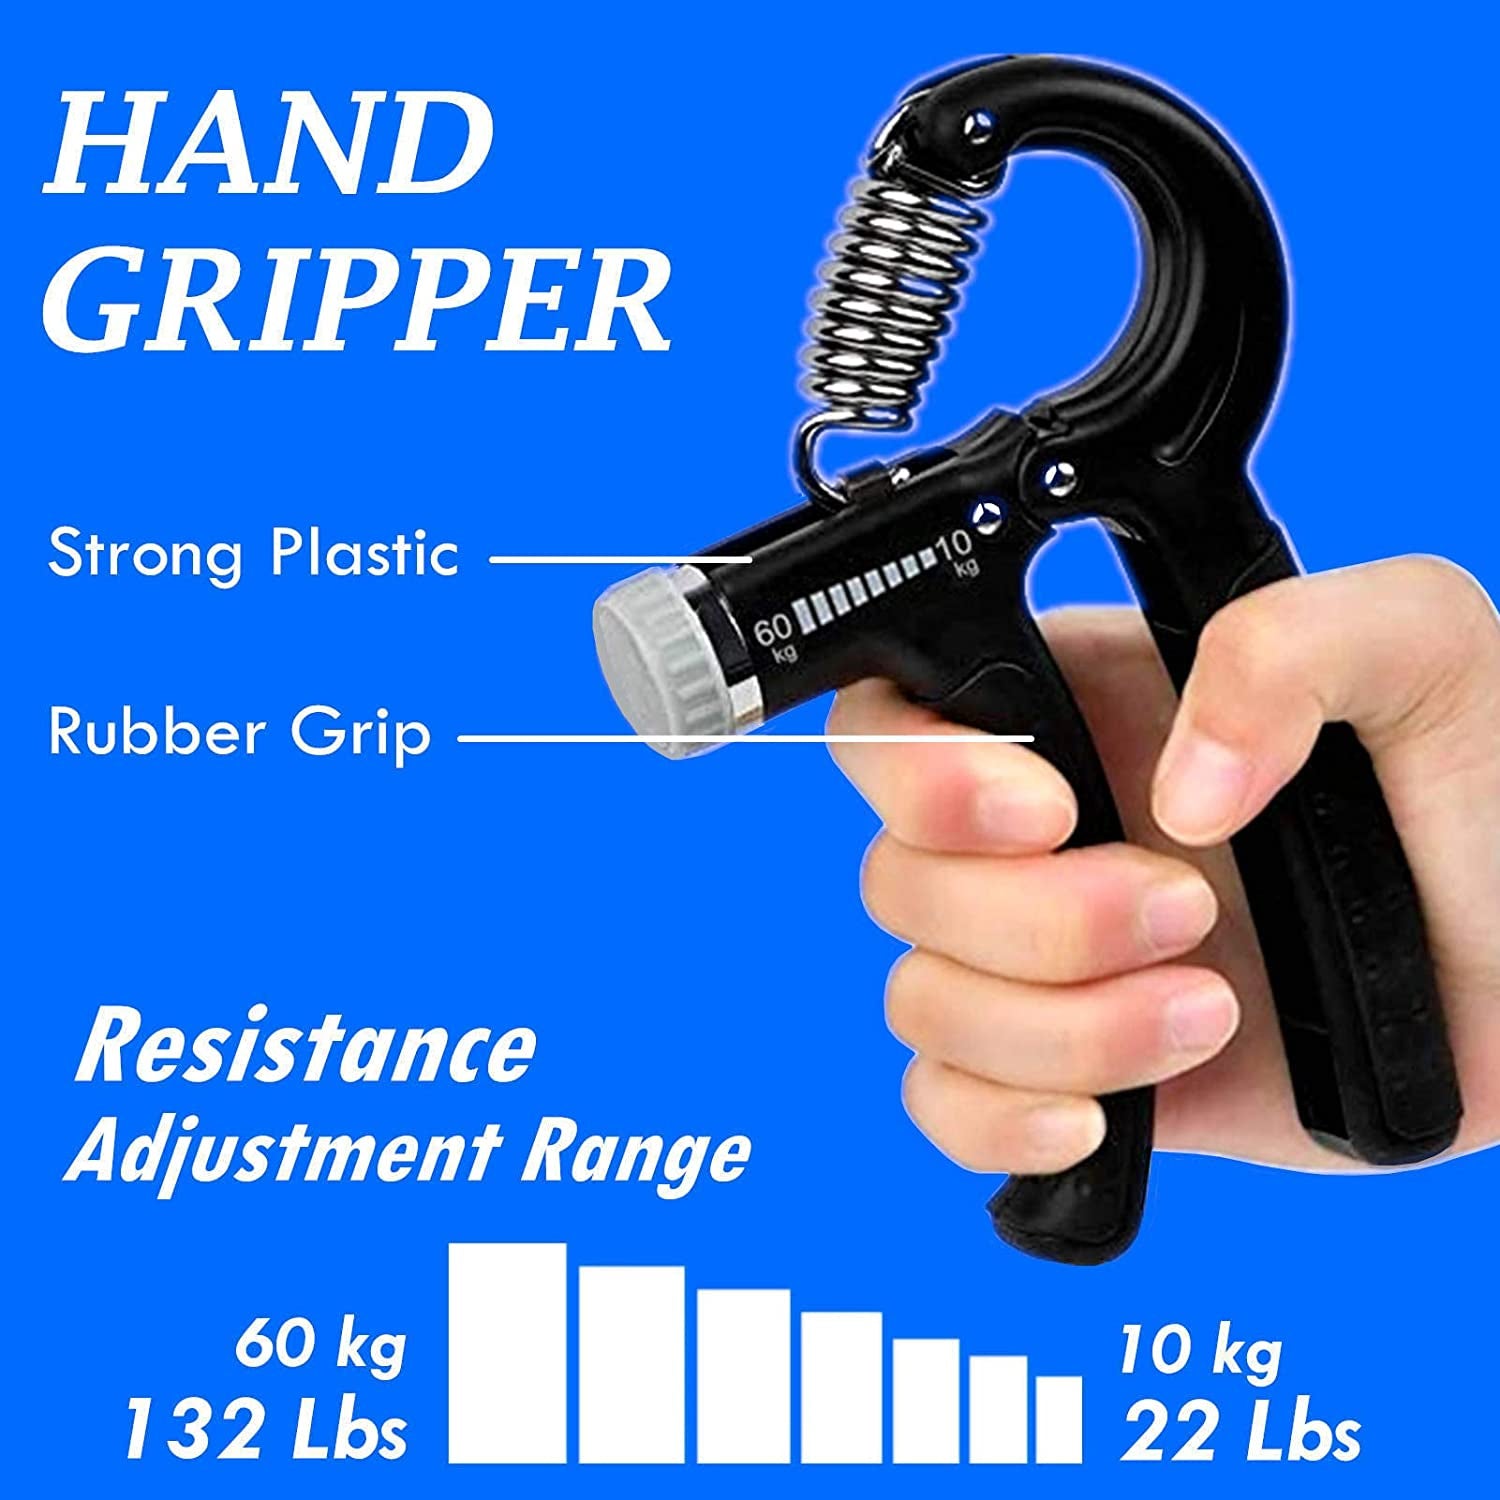 Grip Strength Trainer, Forearm Workout, Hand & Finger Exerciser - 5 Pack